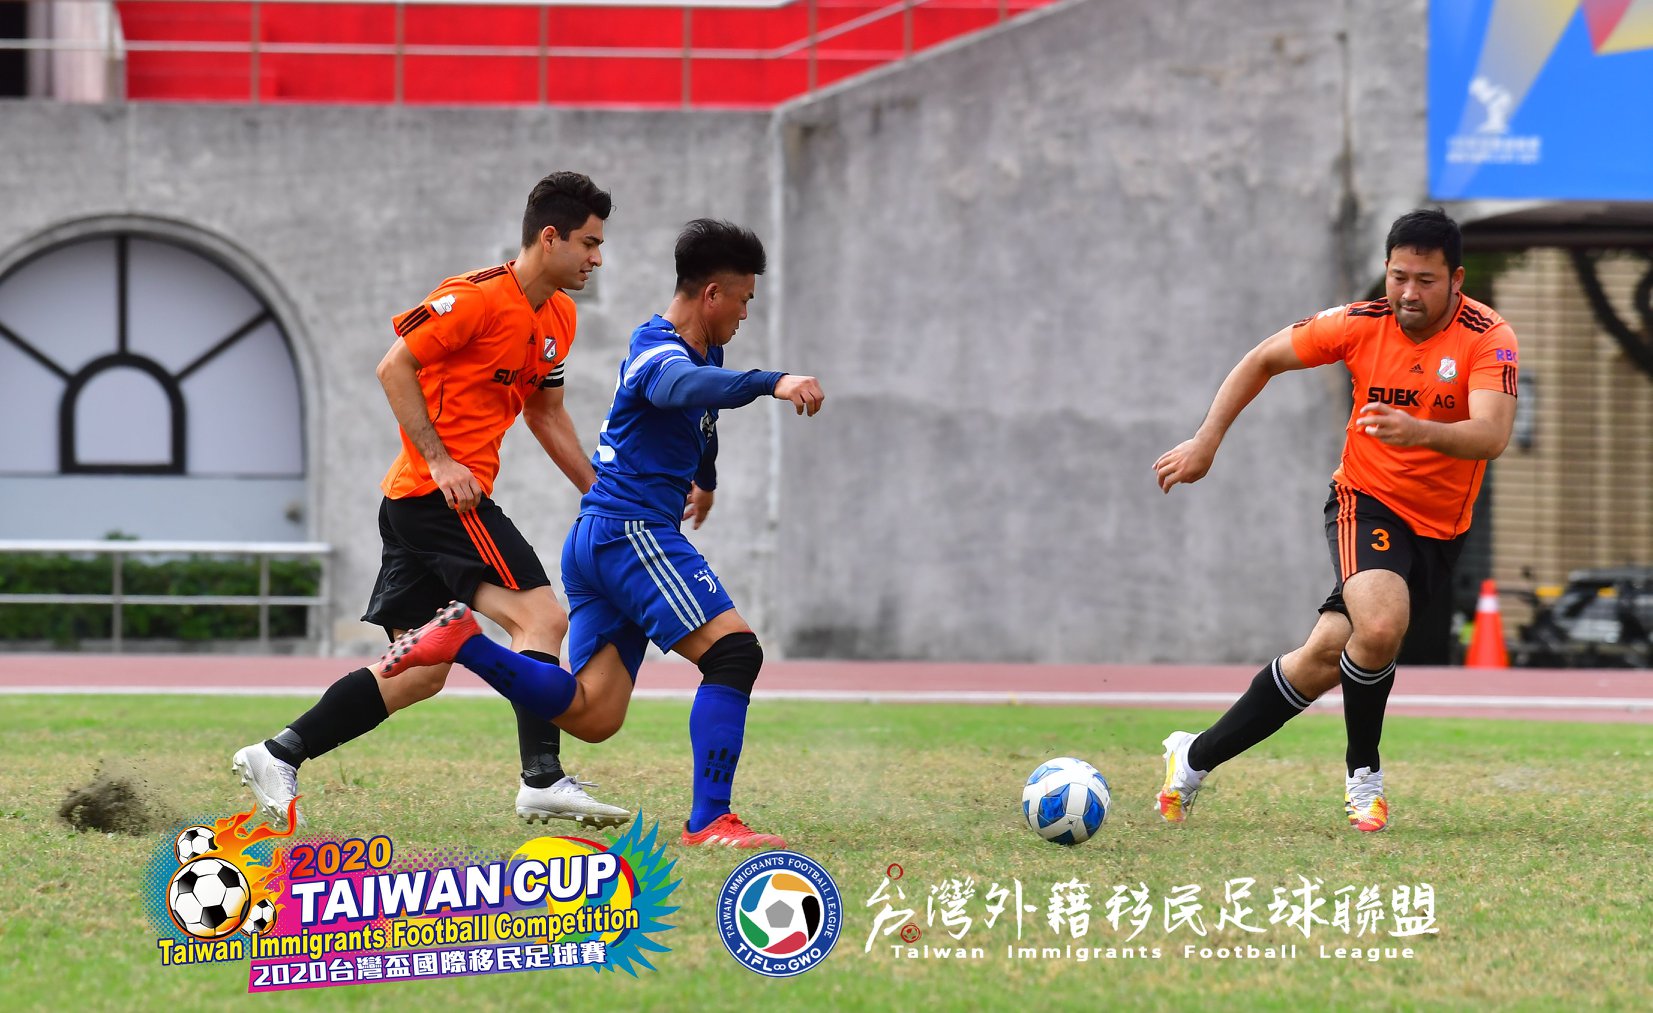 Foto Taiwan Cup 2020. Sumber: GWO